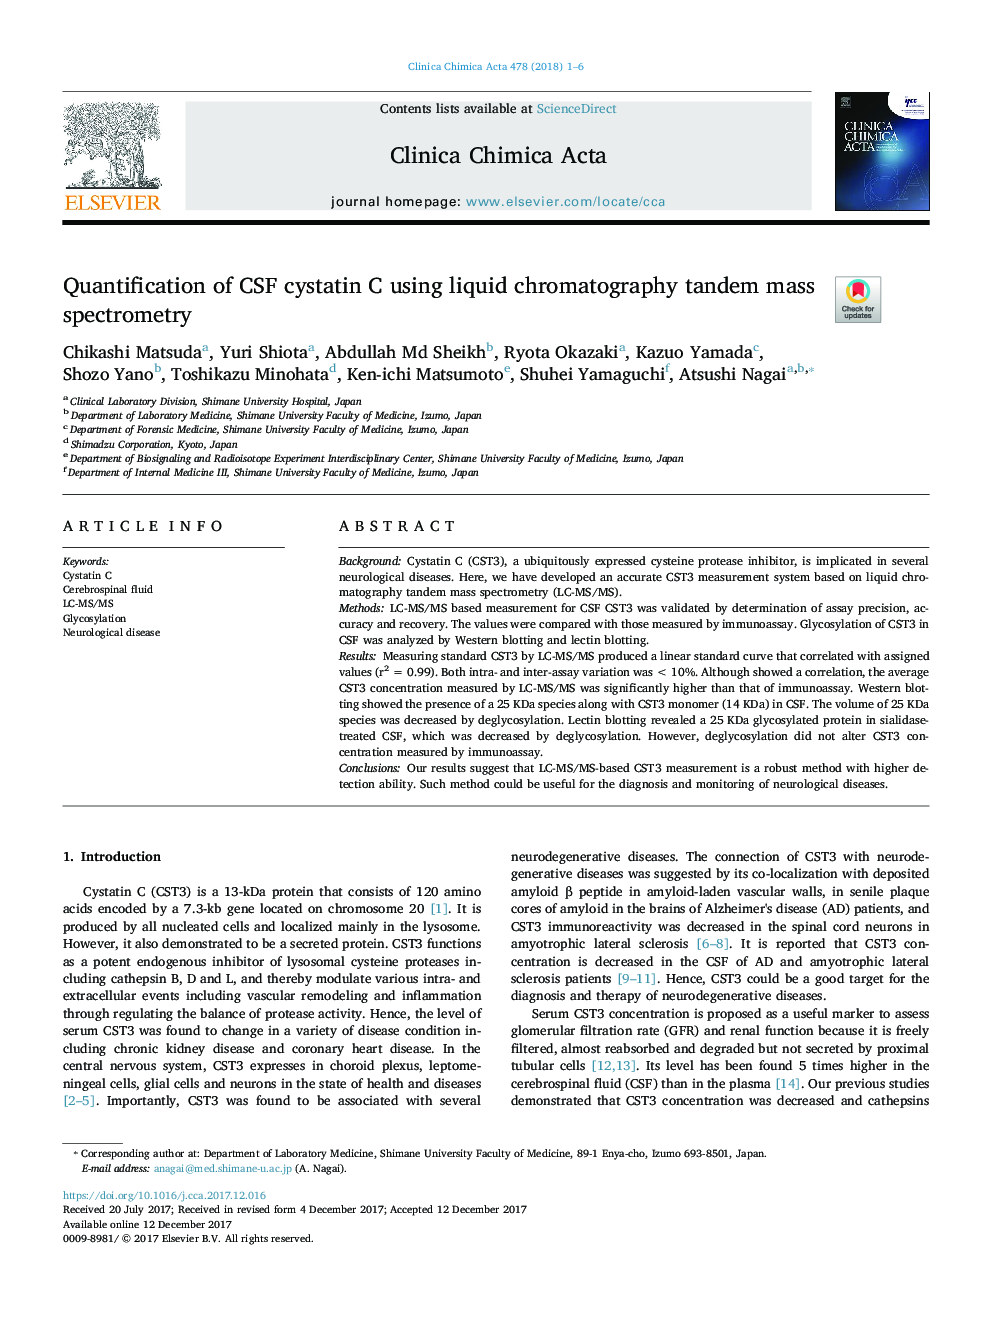 Quantification of CSF cystatin C using liquid chromatography tandem mass spectrometry